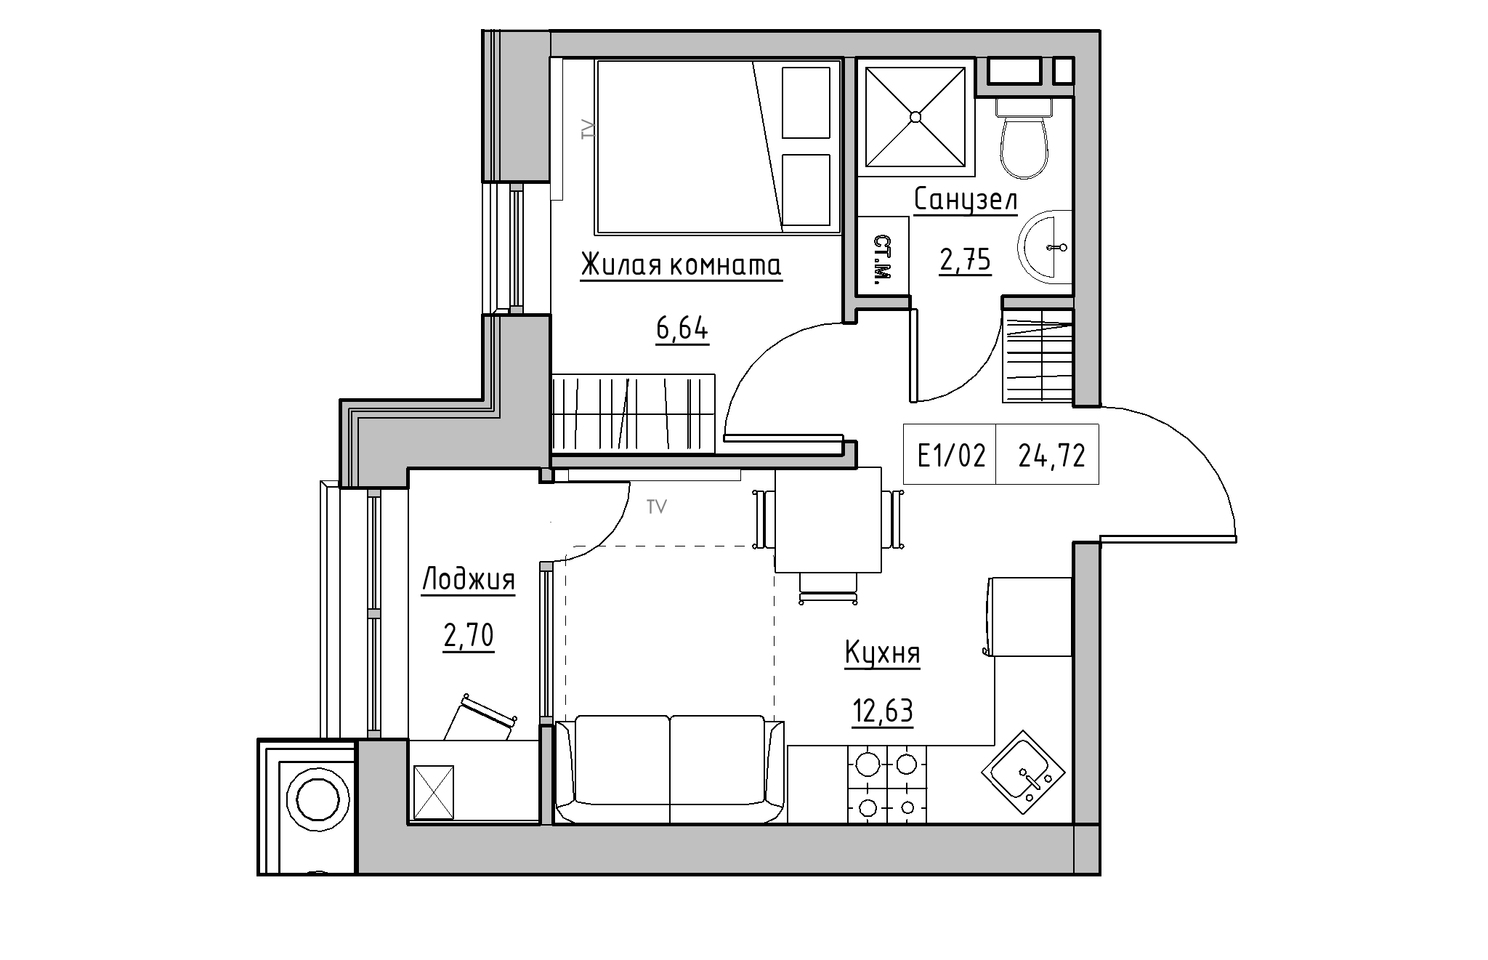 Planning 1-rm flats area 24.72m2, KS-010-02/0013.